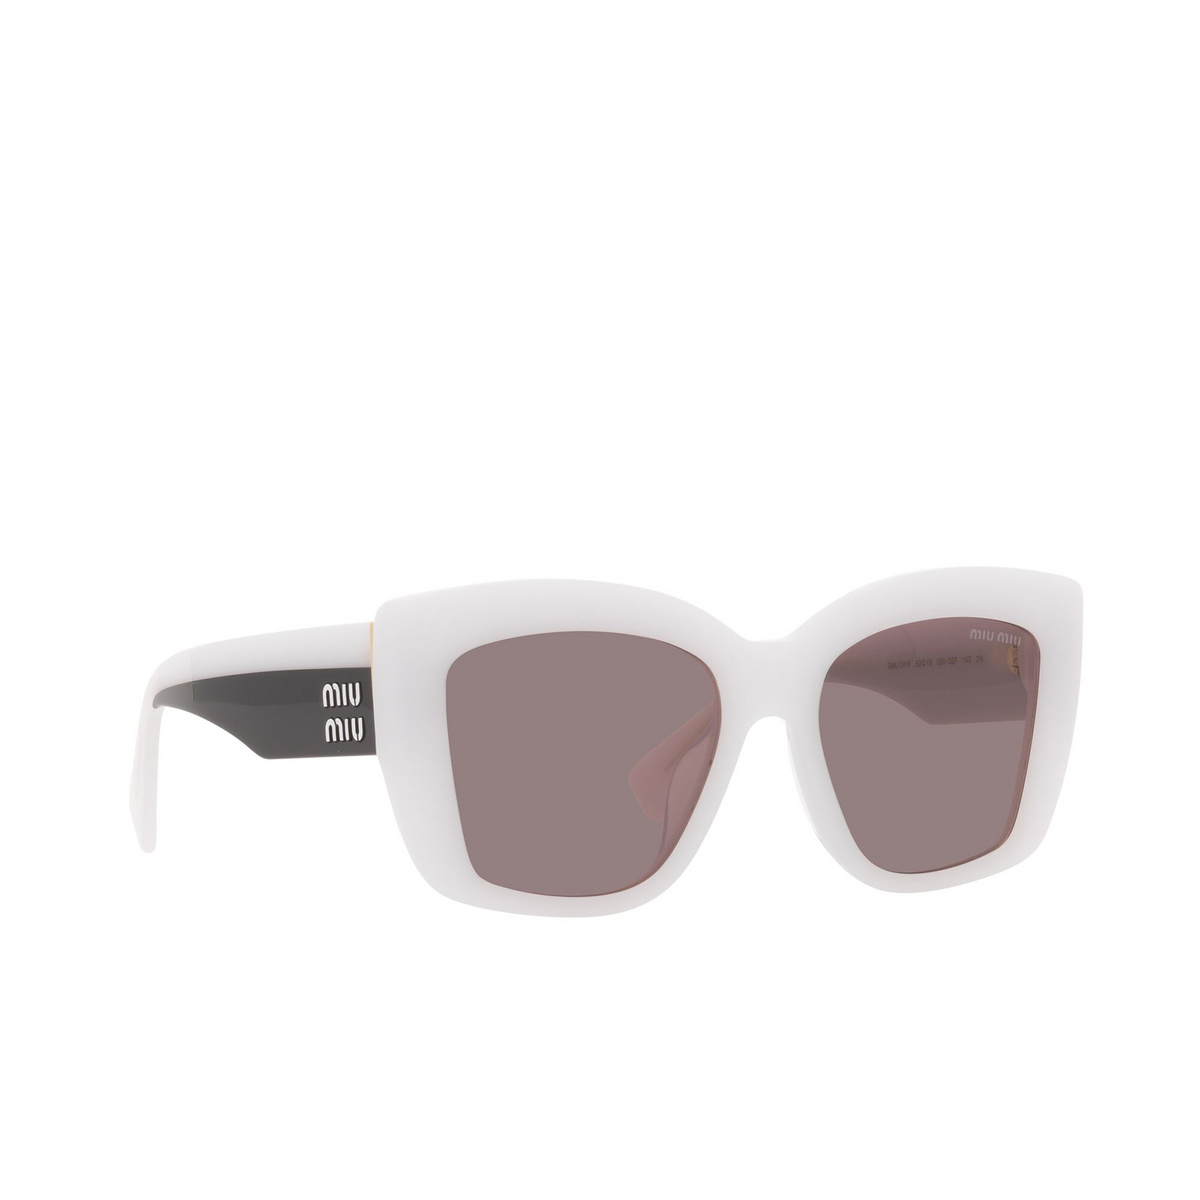 Miu Miu® Square Sunglasses: MU 04WS color White Opal 05X05P - three-quarters view.